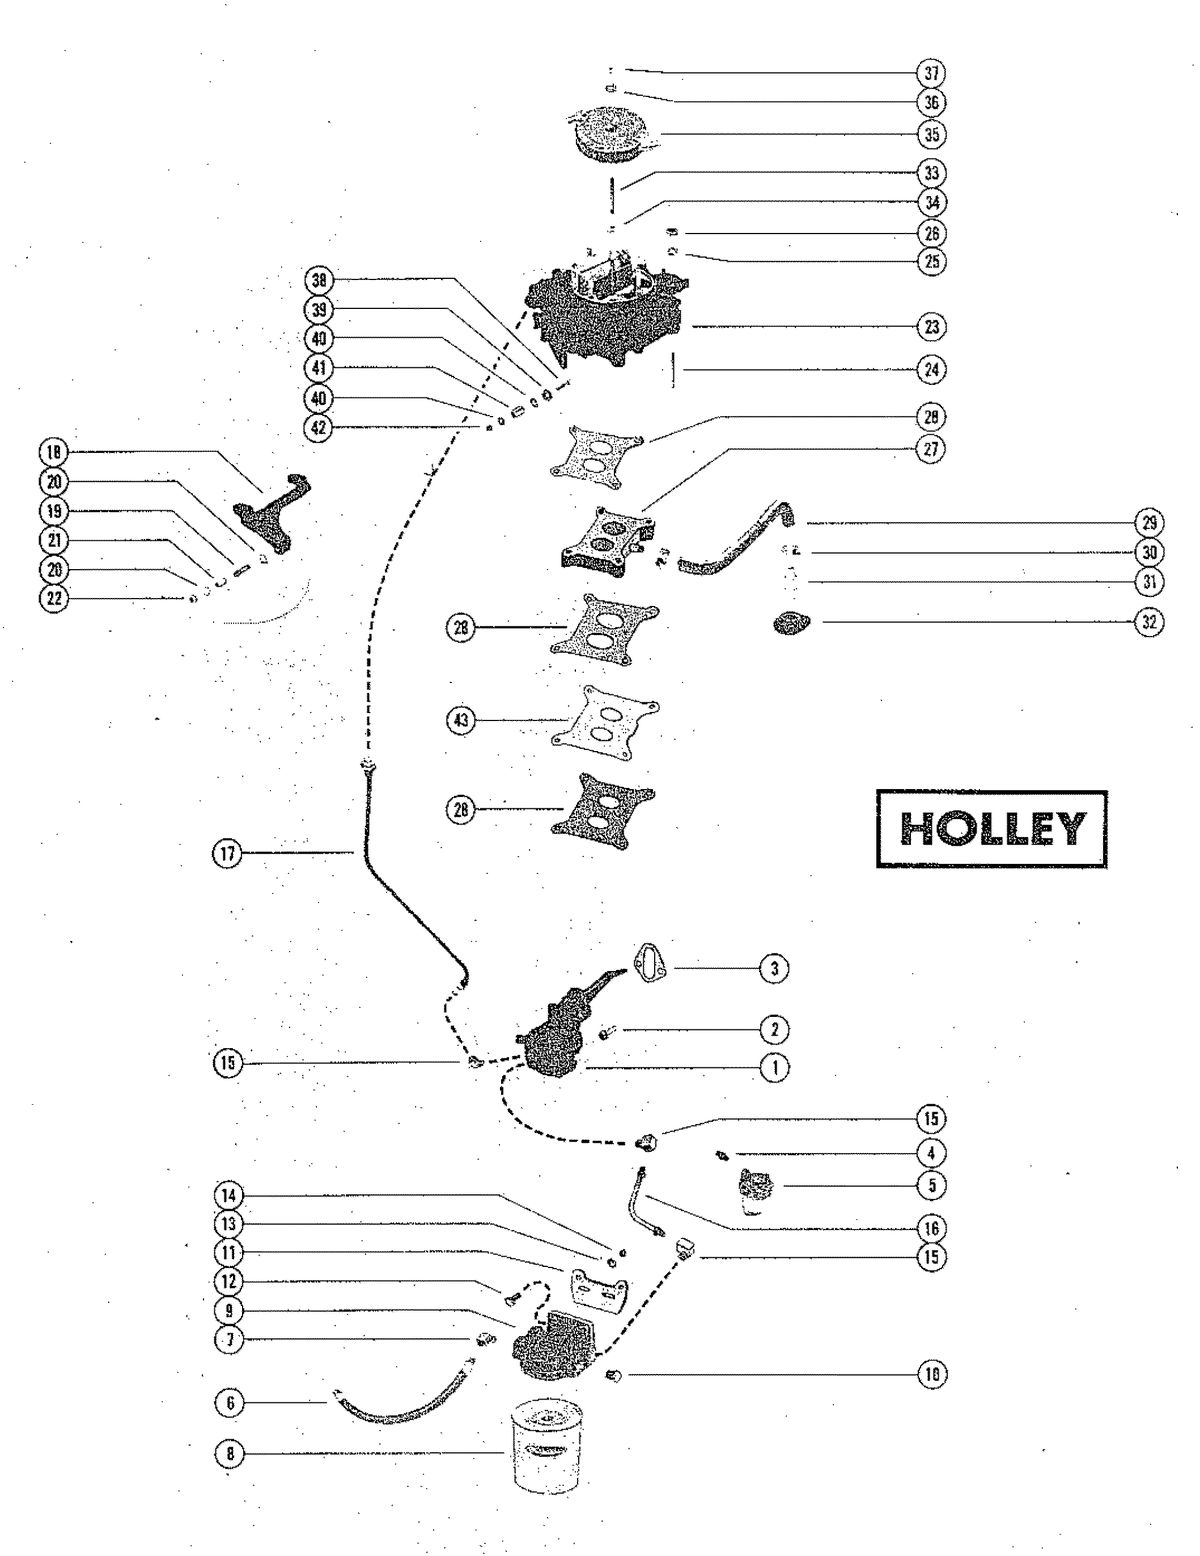 MERCRUISER 888 (2 BBL)ENGINE FUEL PUMP, FUEL FILTER AND CARBURETOR(HOLLEY)